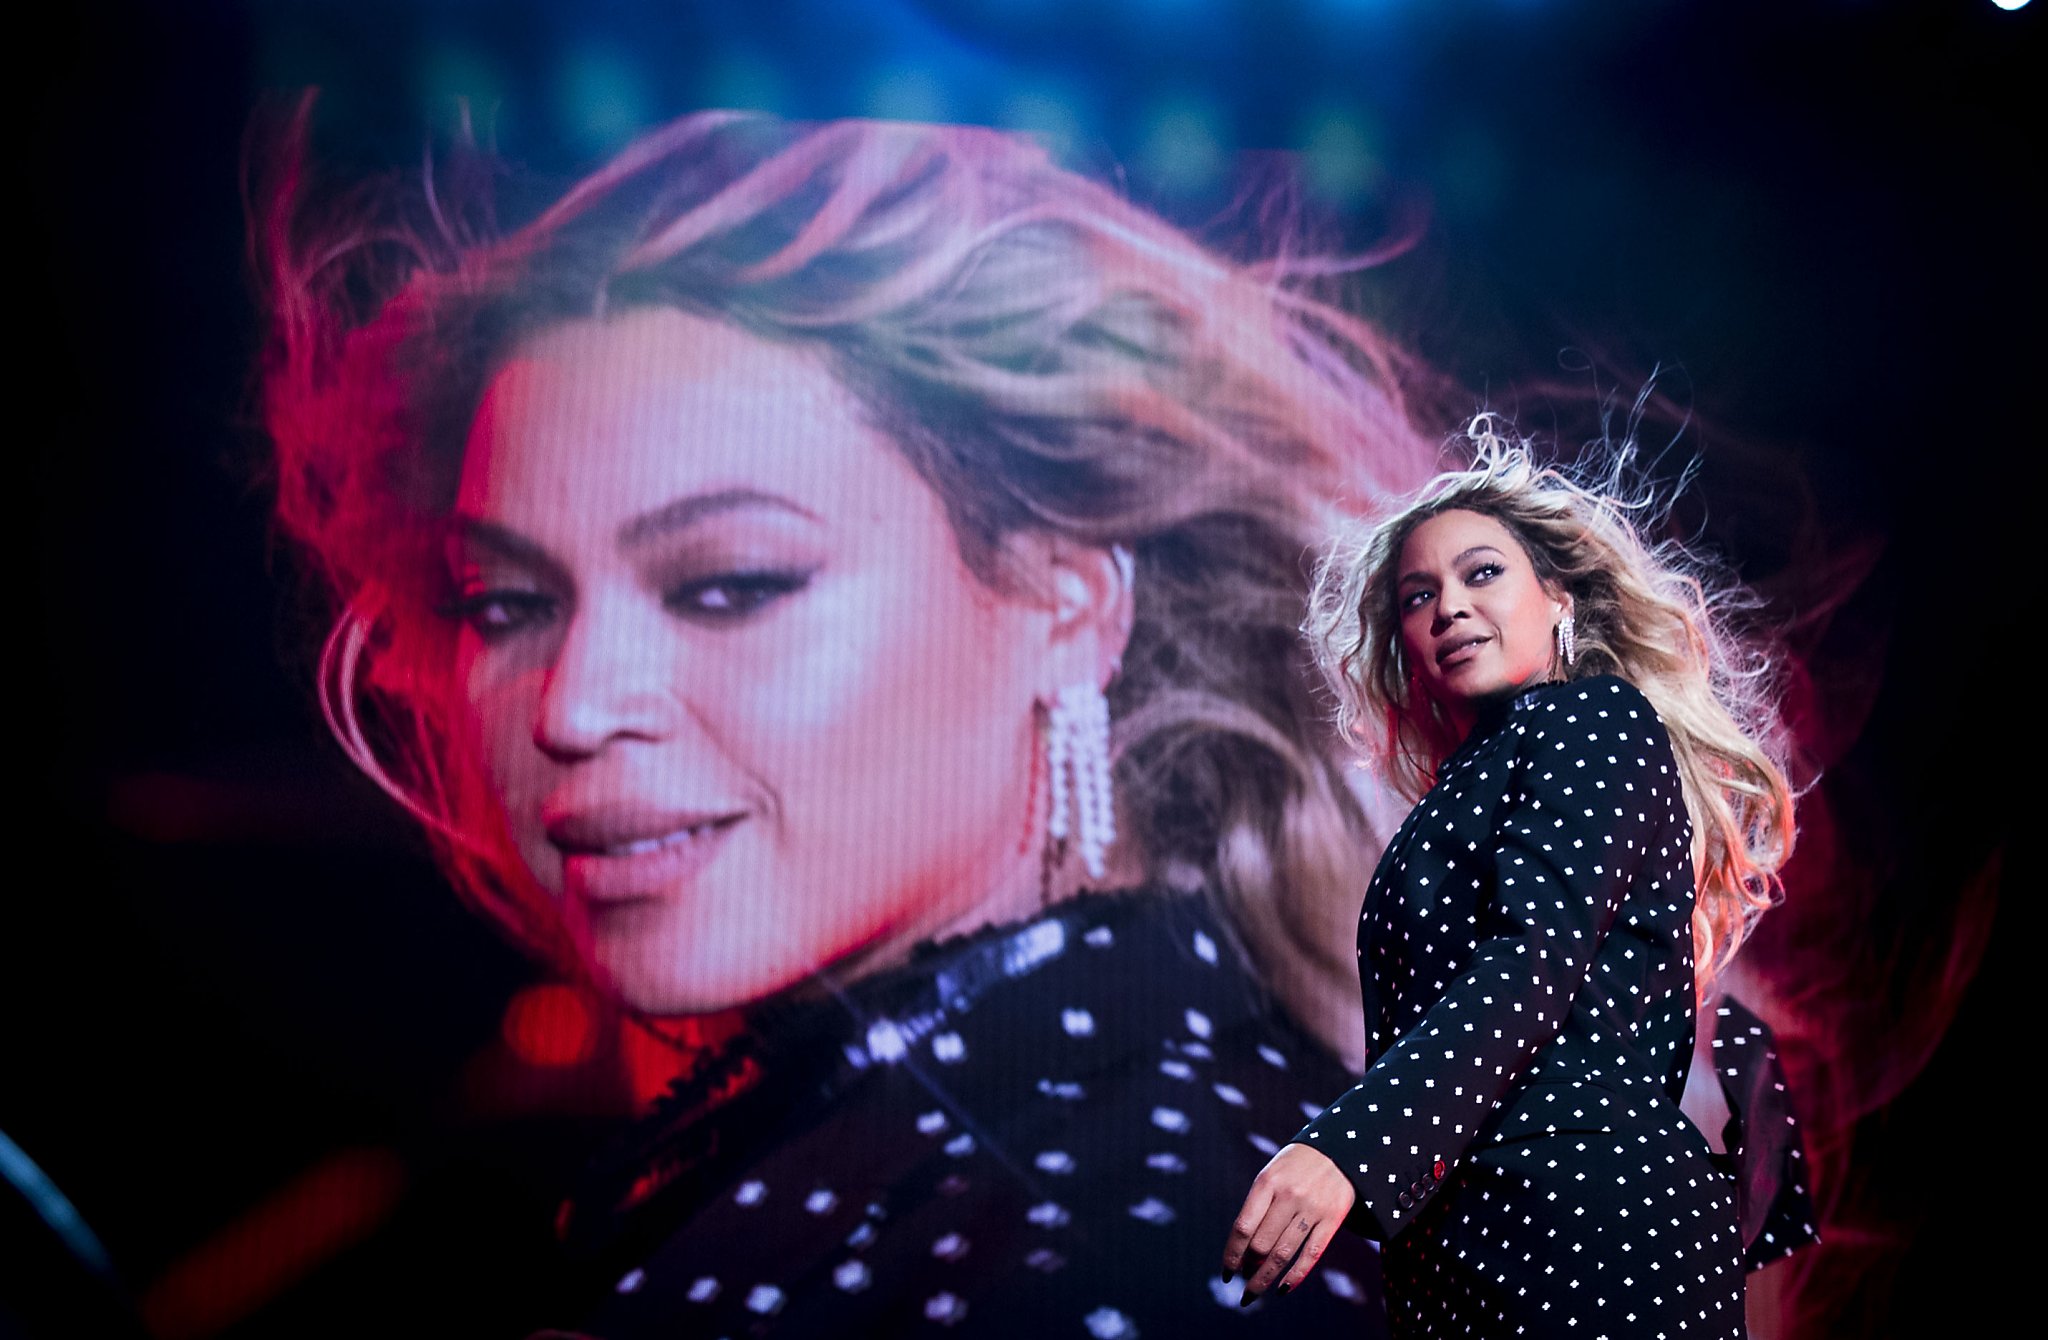 Beyoncé leads Grammy nominations with 9 nods